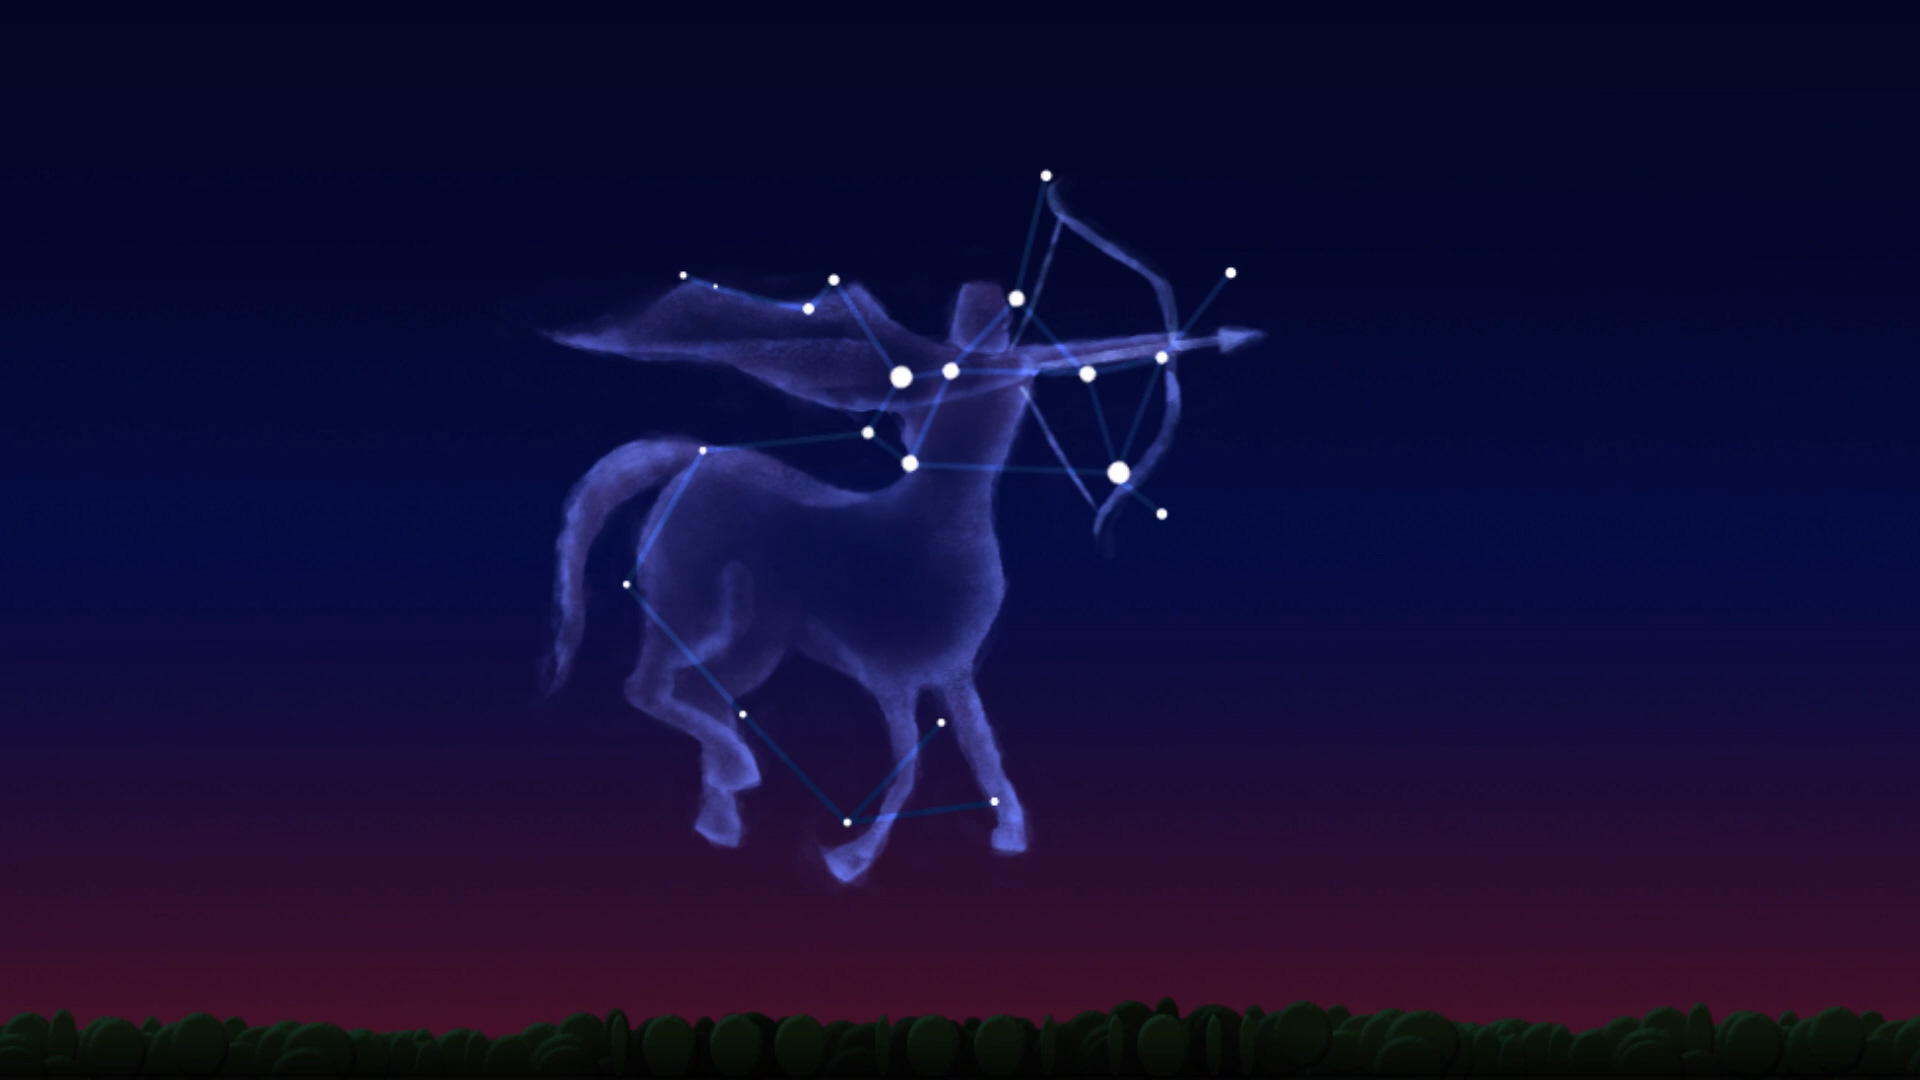 Illustrated view of Constellation Saggitatrius with key stars.